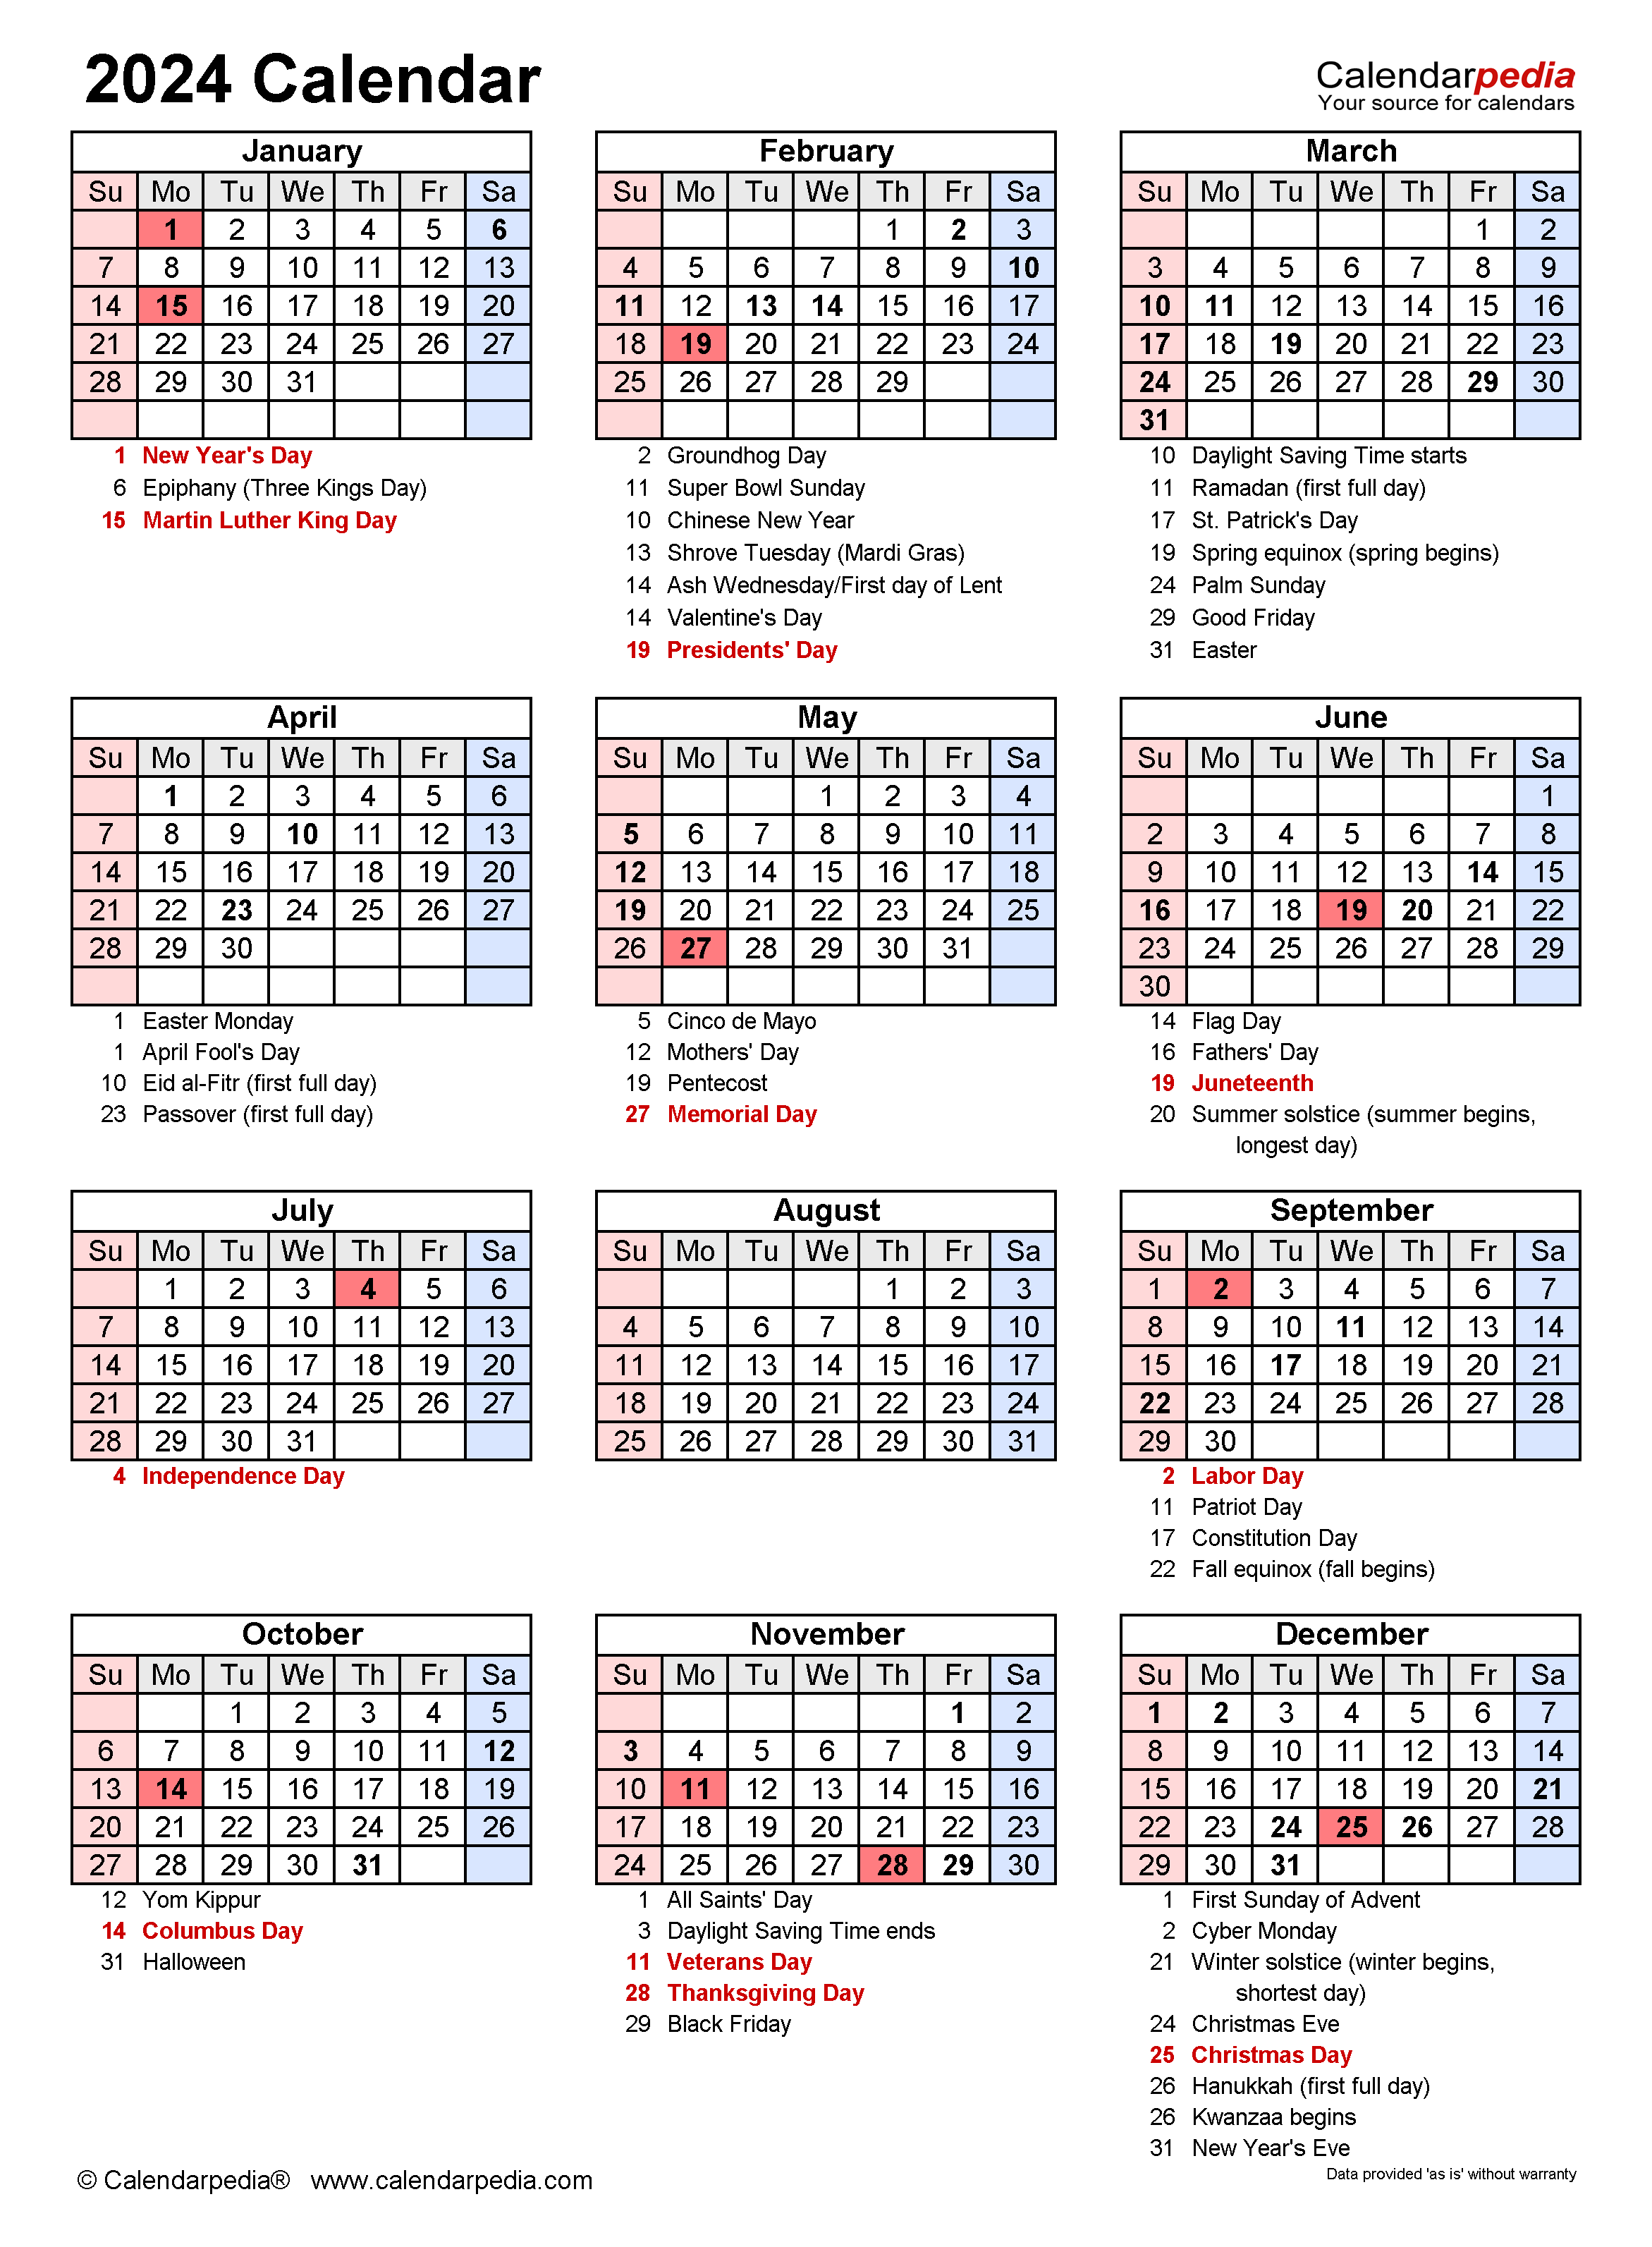 2024 Calendar Free Printable PDF Templates Calendarpedia - Free Printable 2024 Calendar With Holidays United States